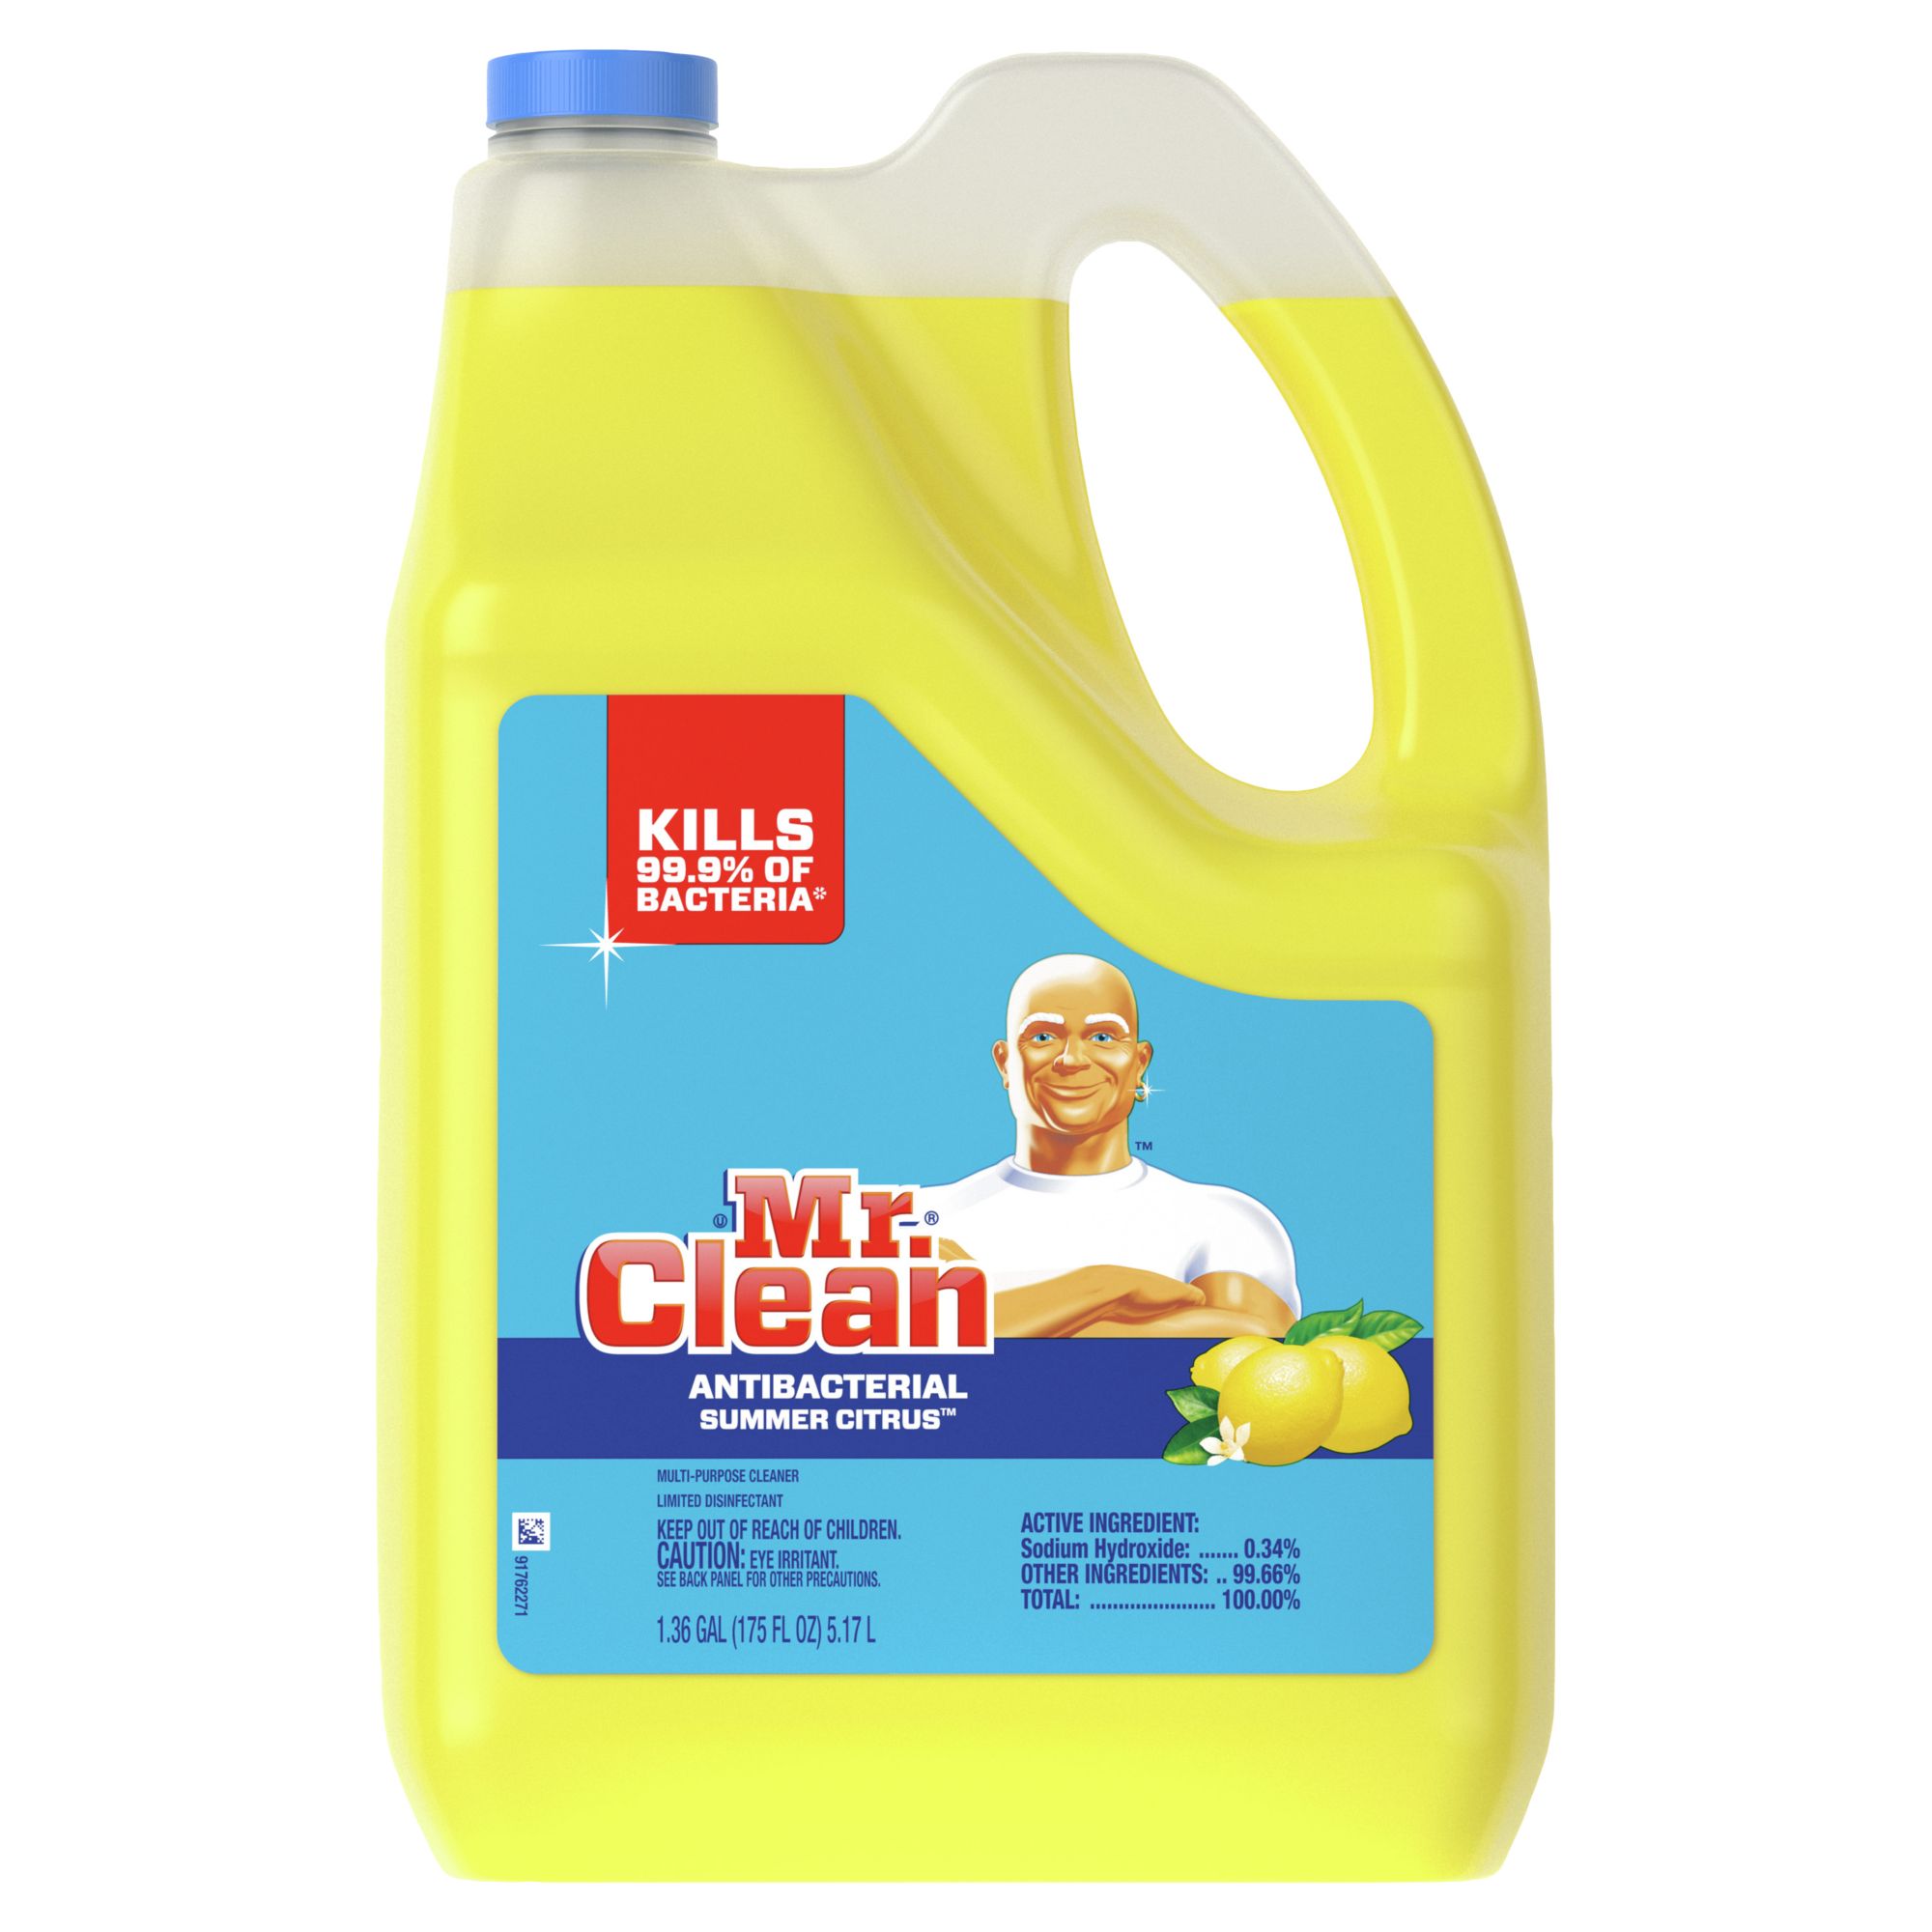 Soft Scrub 36-oz Bleach Disinfectant Liquid All-Purpose Cleaner in